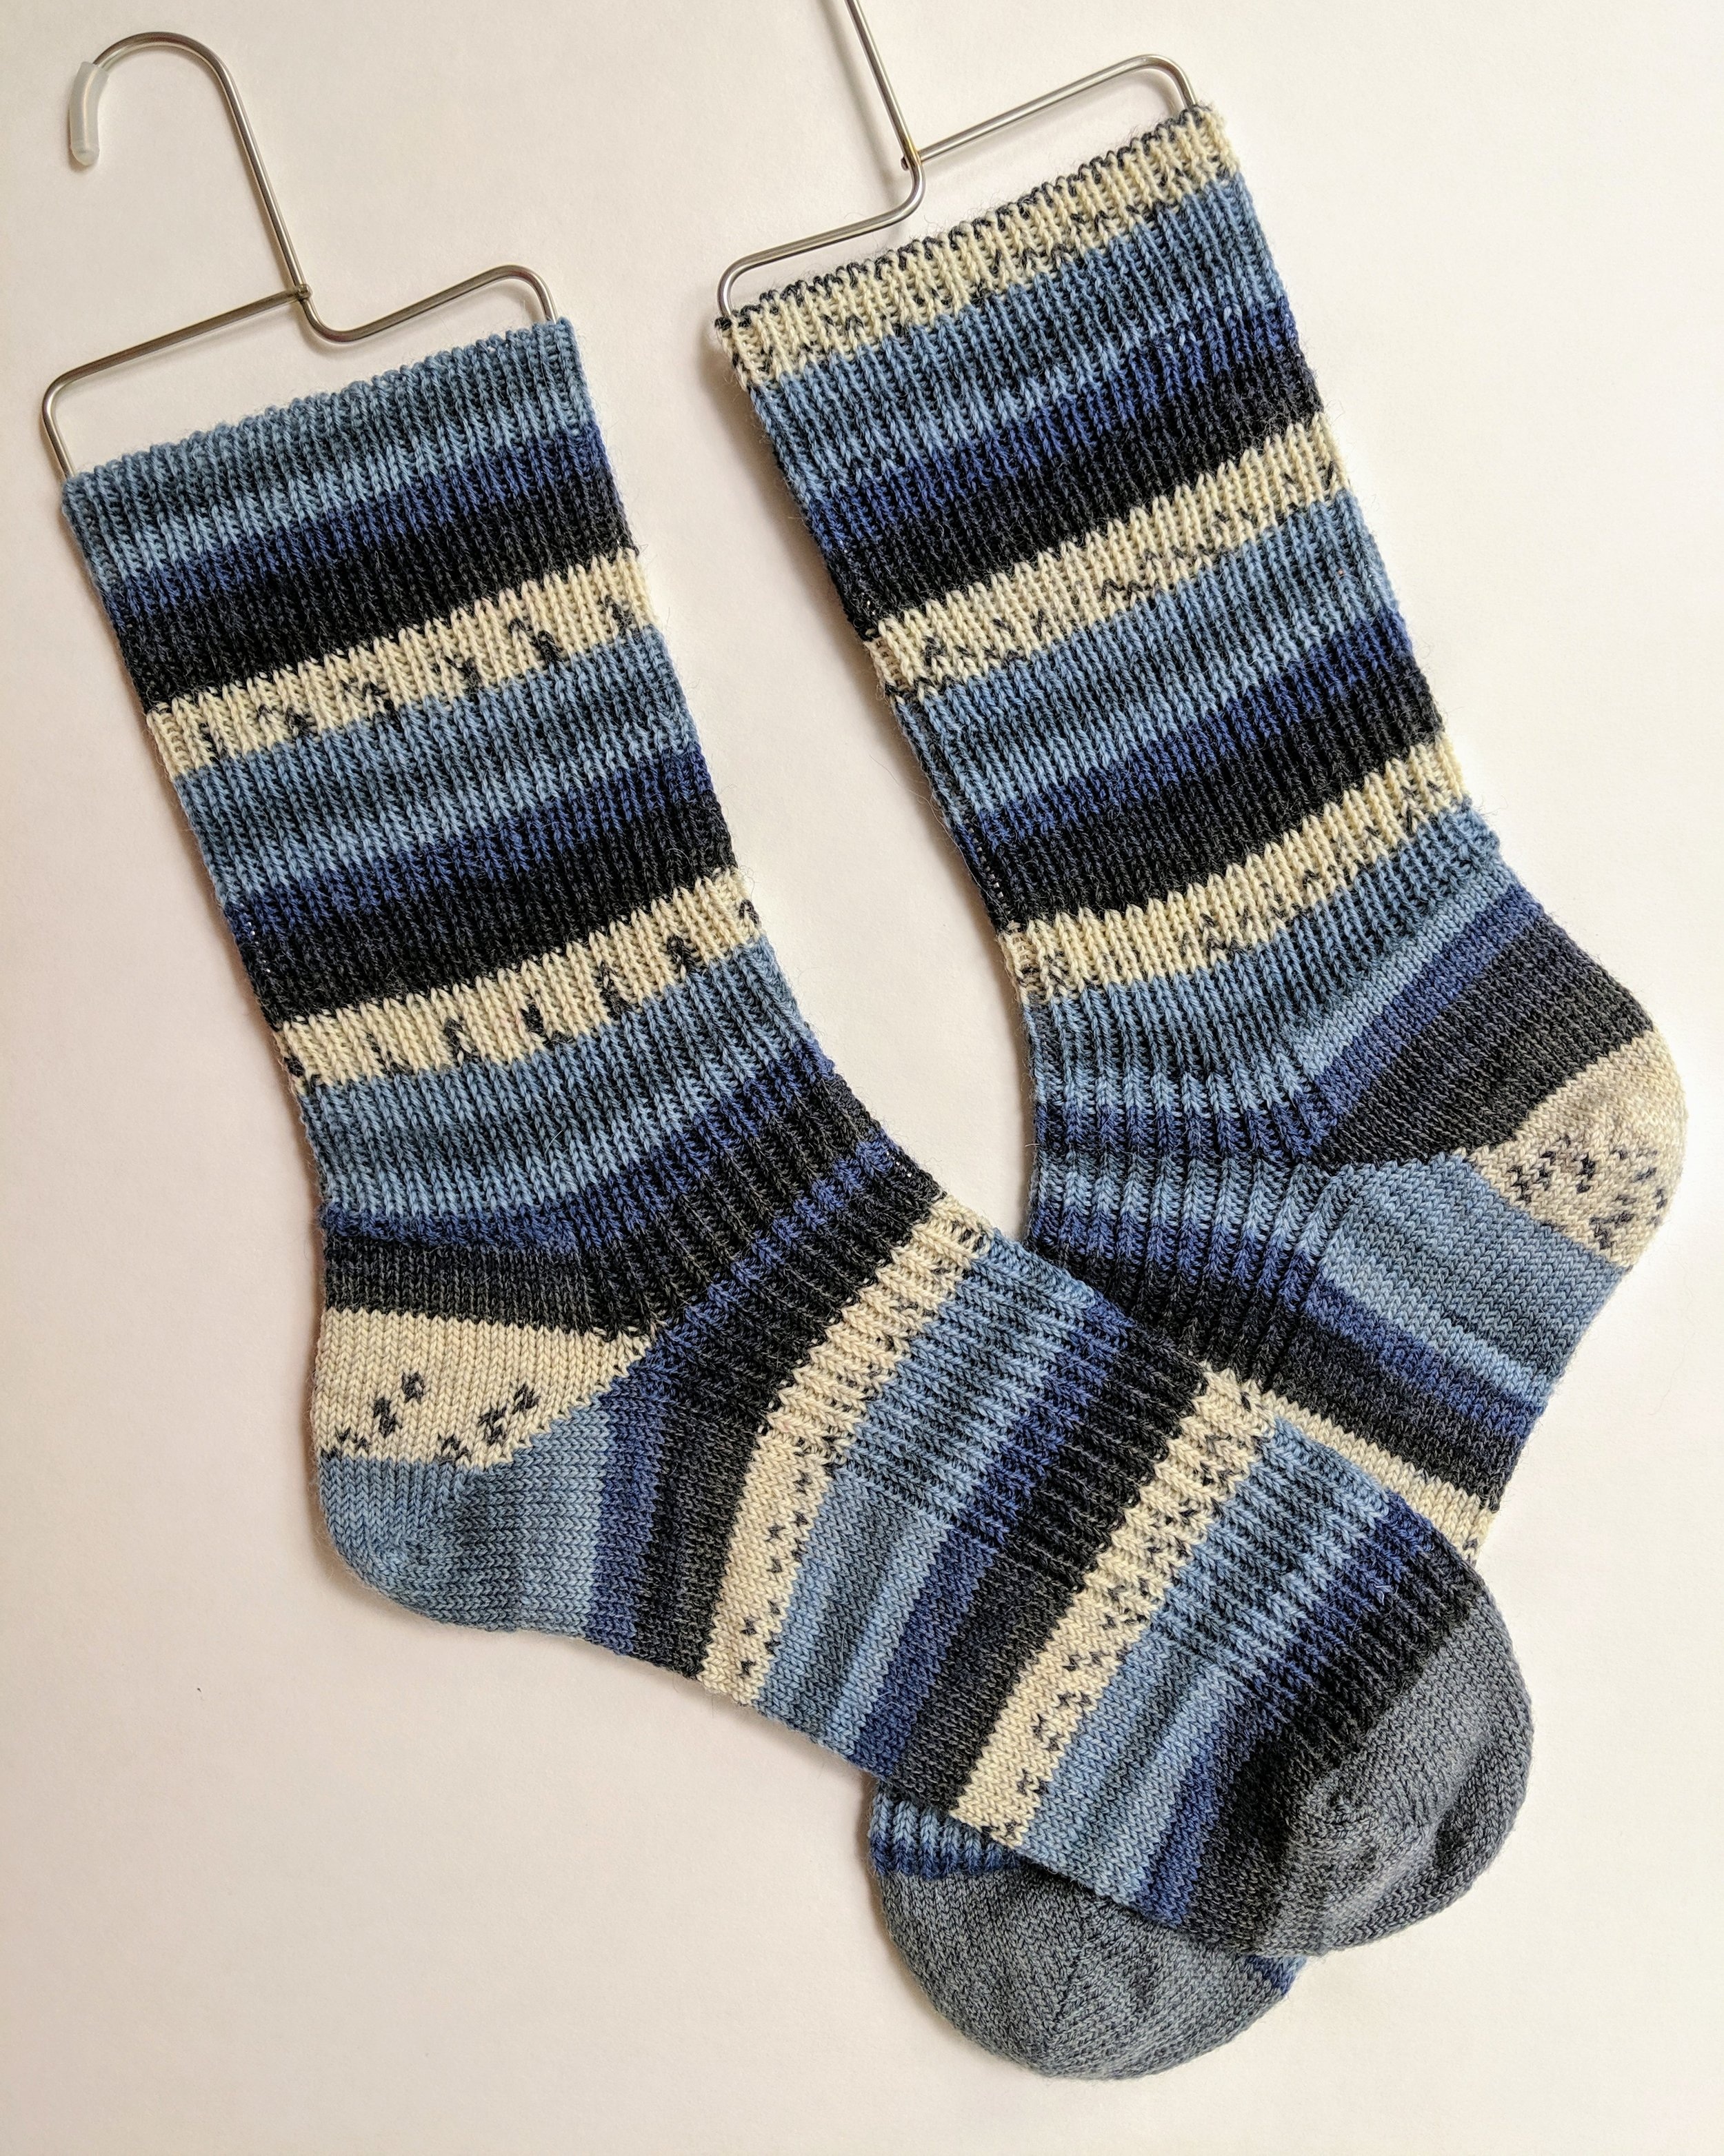 Men's ribbed socks; wool and nylon